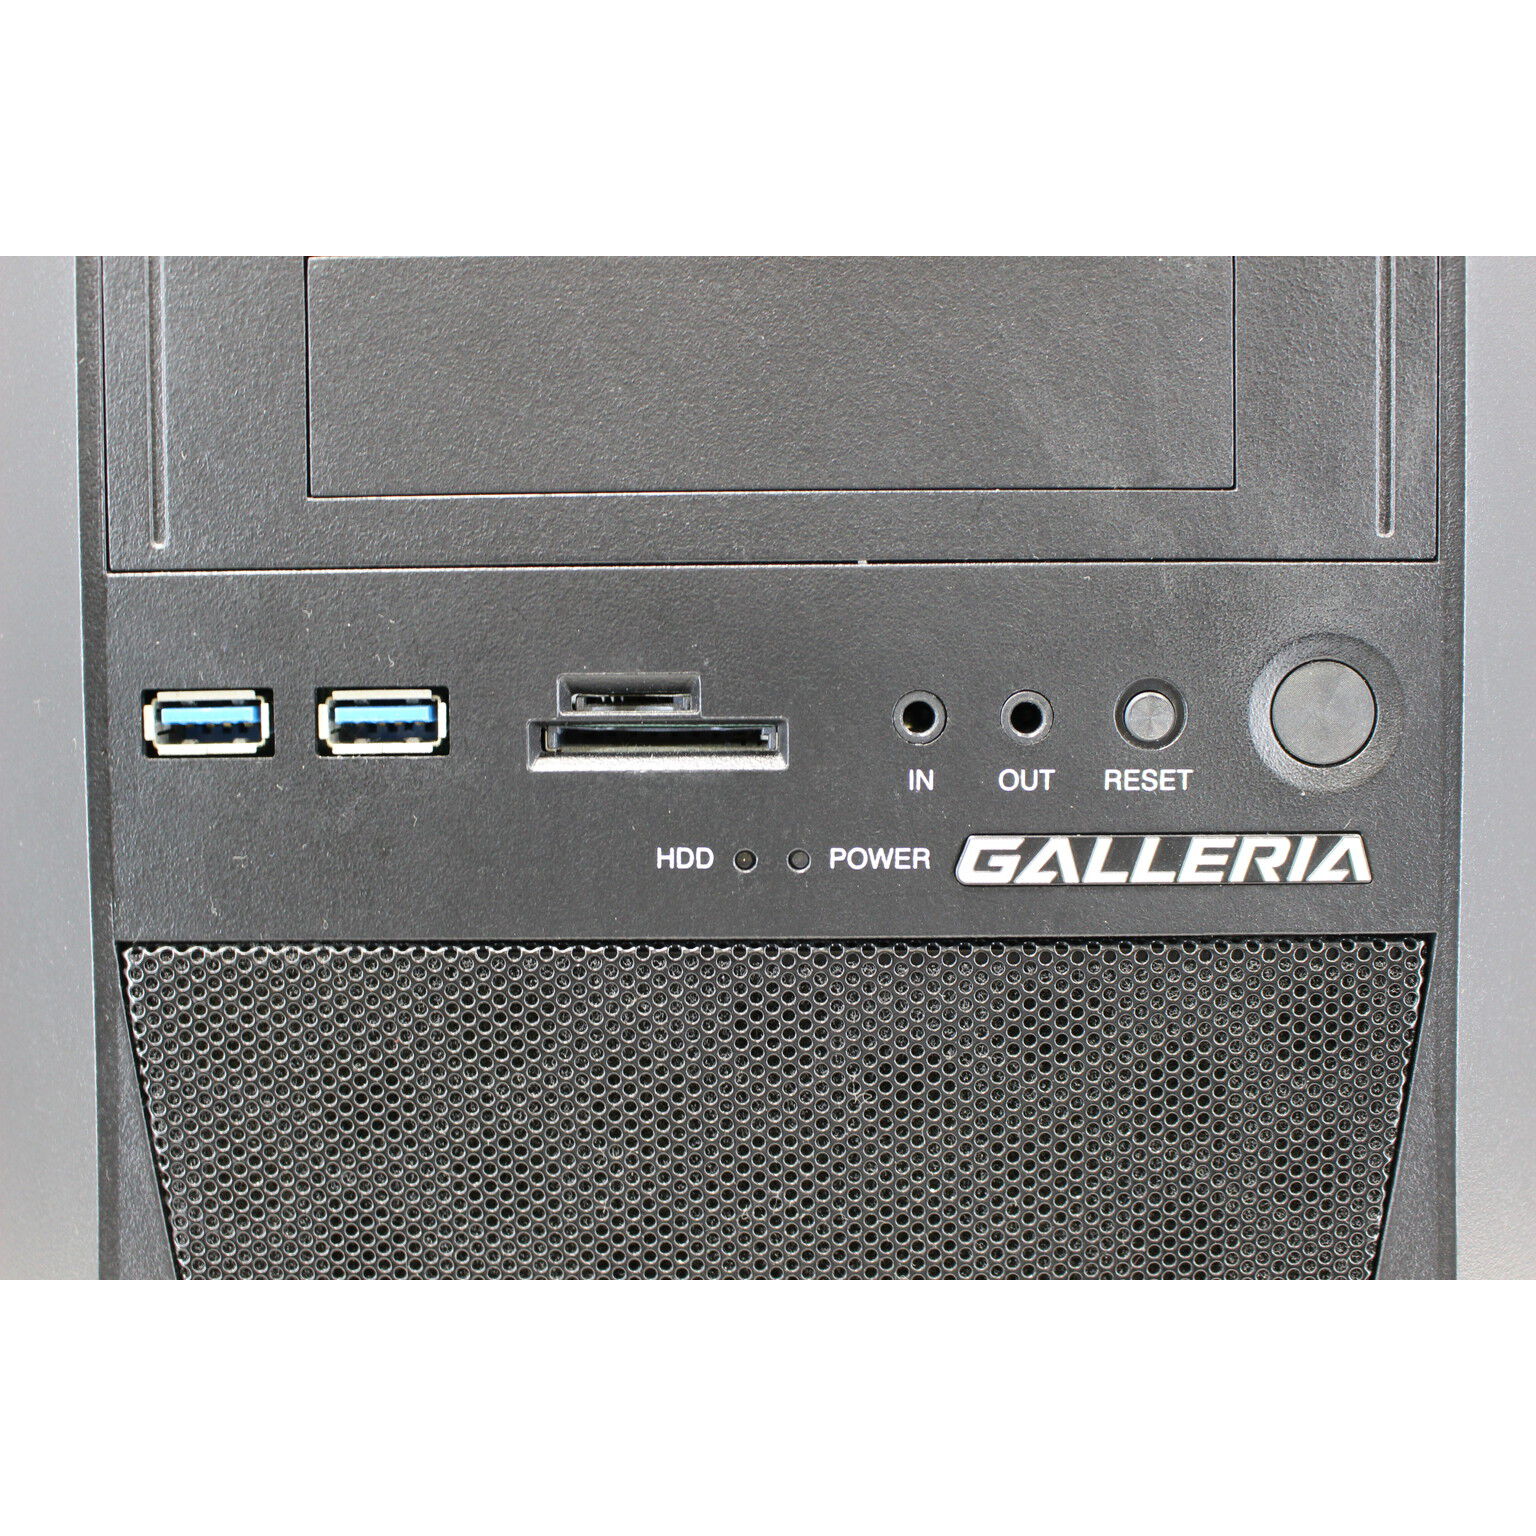 THIRDWAVE GALLERIA Core i7-8700 SSD\u0026HDD